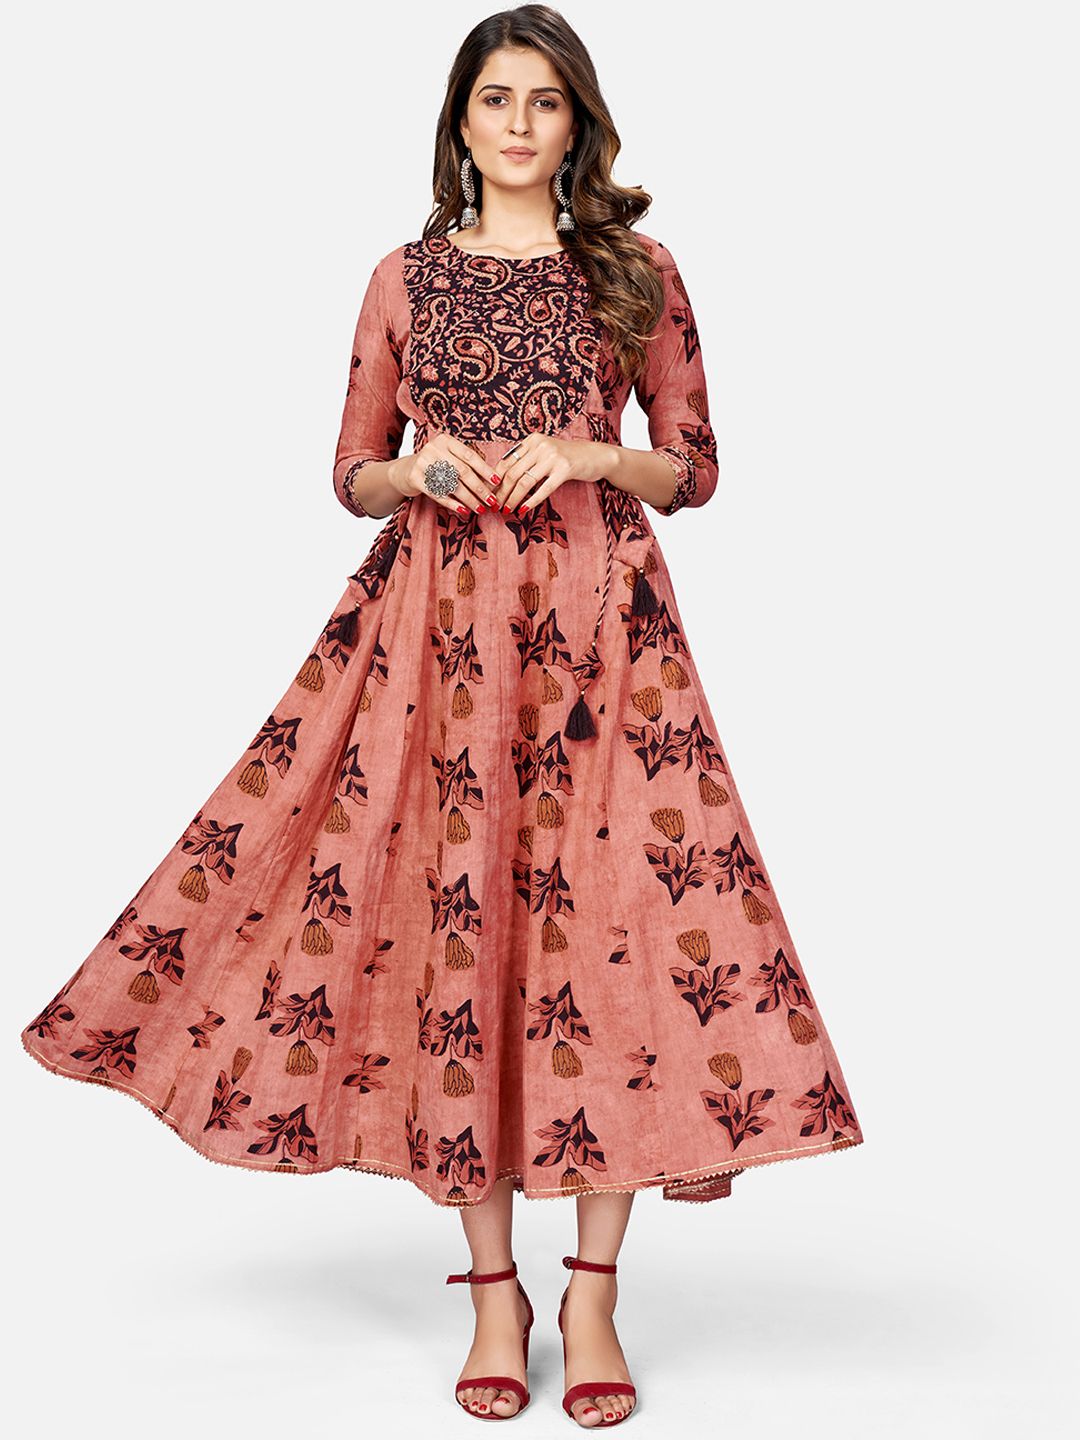 Flipkart Big Billion Sale: Get up to 85% off on women's kurta-pant dupatta  sets | Fashion Trends - Hindustan Times